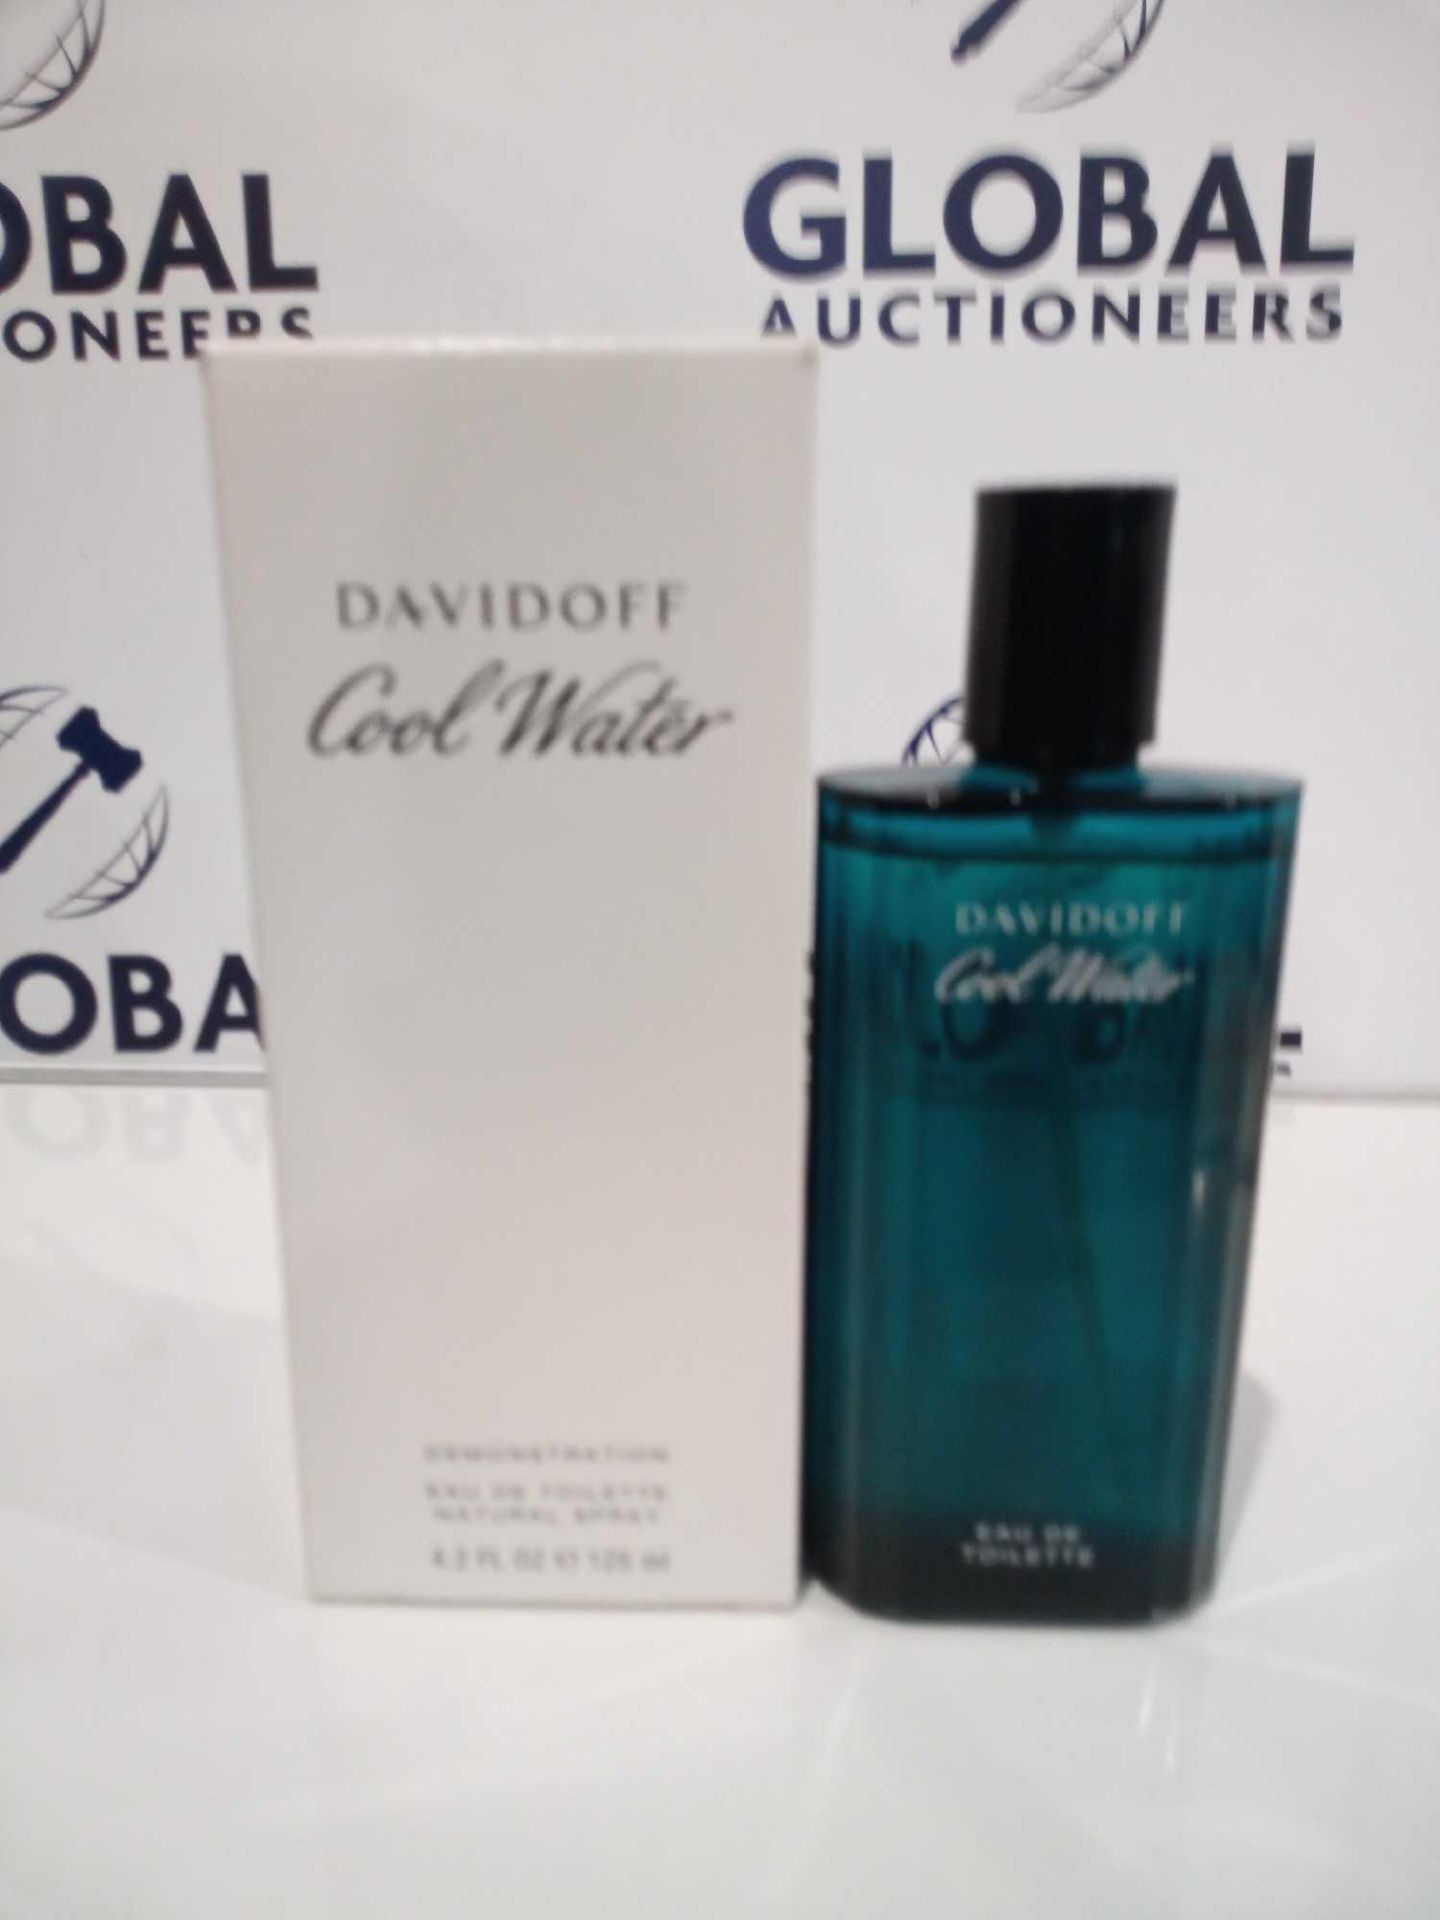 RRP £35 Boxed Brand New Full Tester Bottle Of David Off Cool Water 125Ml Eau De Toilette